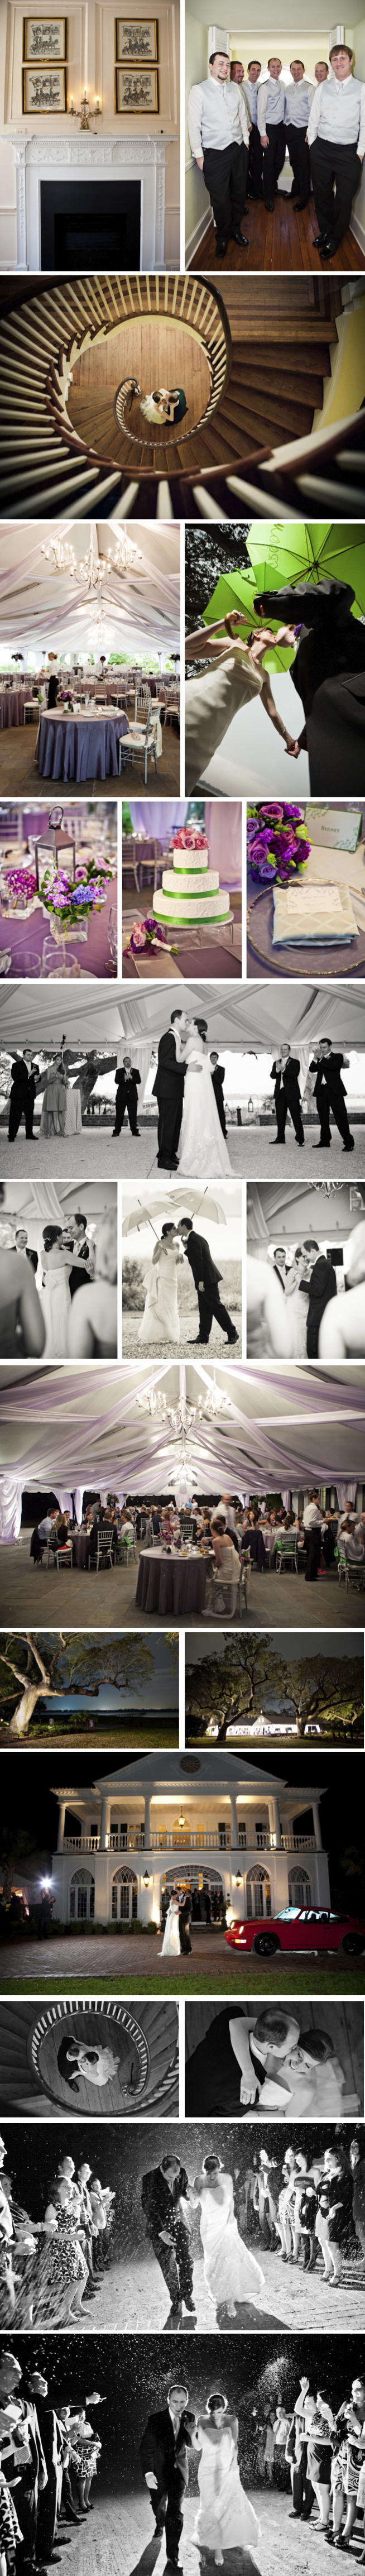 wedding blogs | wedding pictures